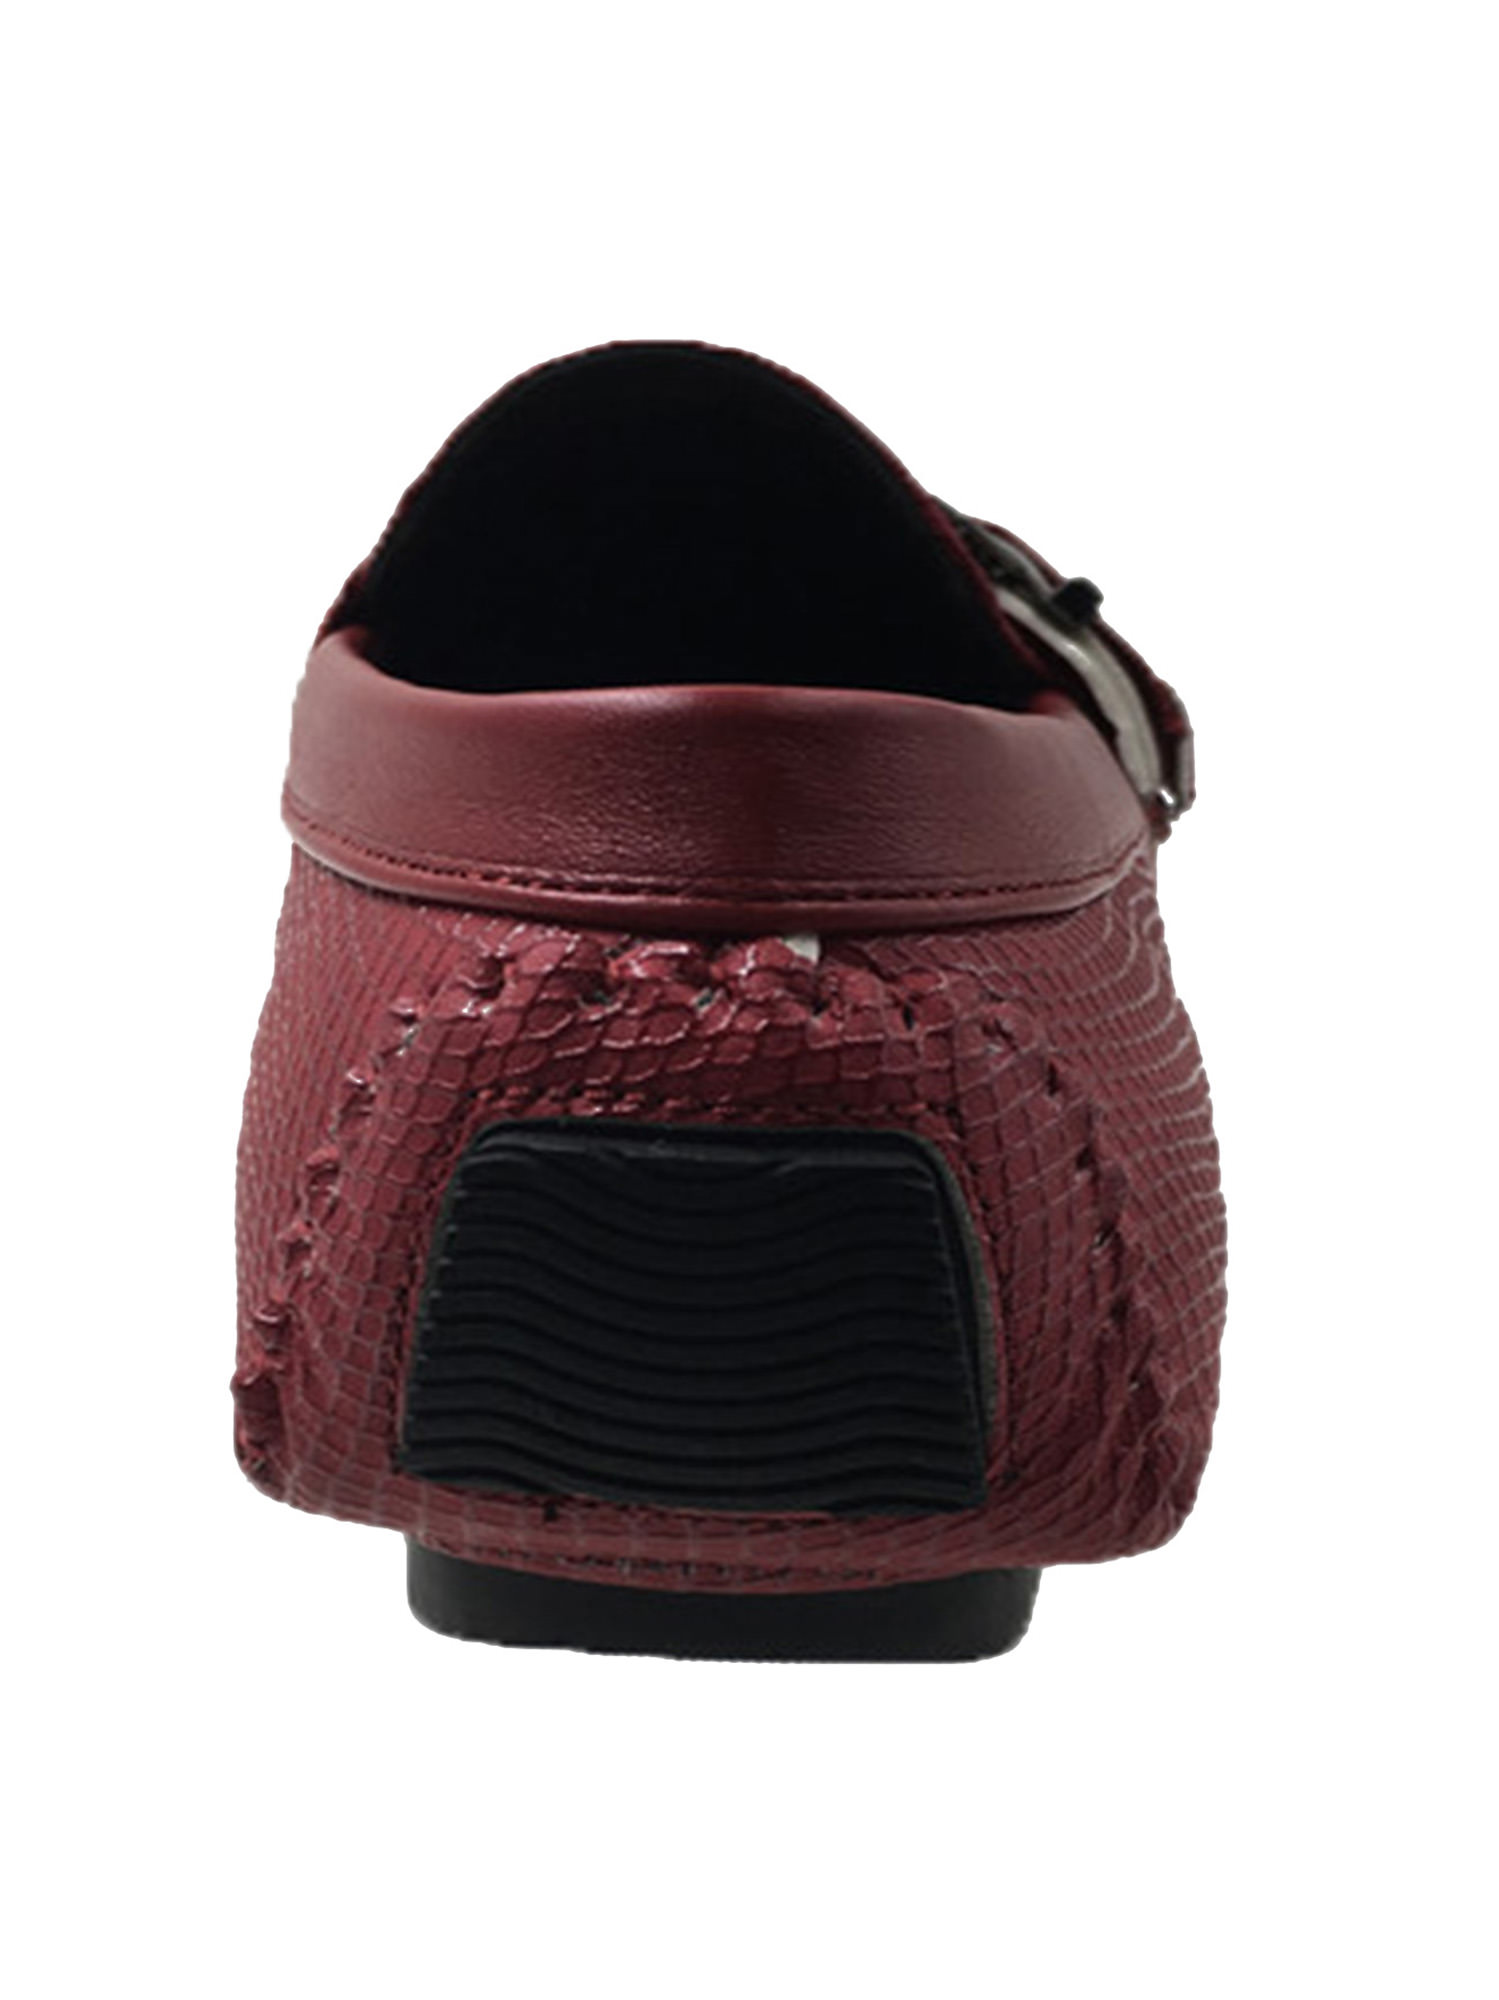 Mecca ME-4103 NORM Mens Belt Strap Slip-On Loafers Shoes - image 5 of 8